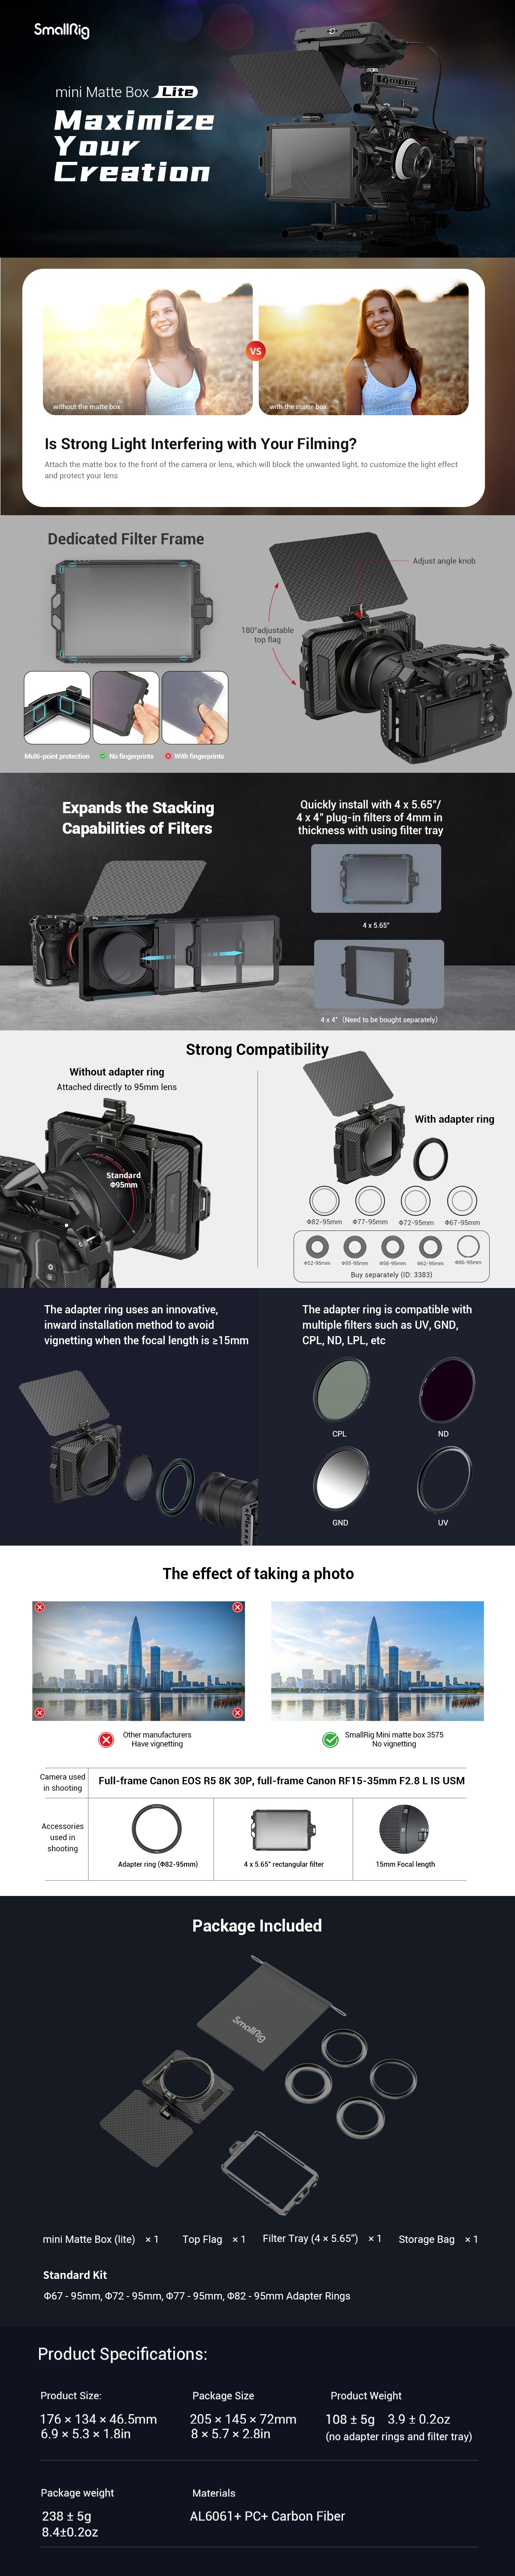 SmallRig Mini Matte Box Lite 3575 แมทบ็อกซ์บังแสงสำหรับชุดริกกล้อง DSLR, Mirrorless รองรับเลนส์ขนาด 95 มม. ราคา 2380 บาท